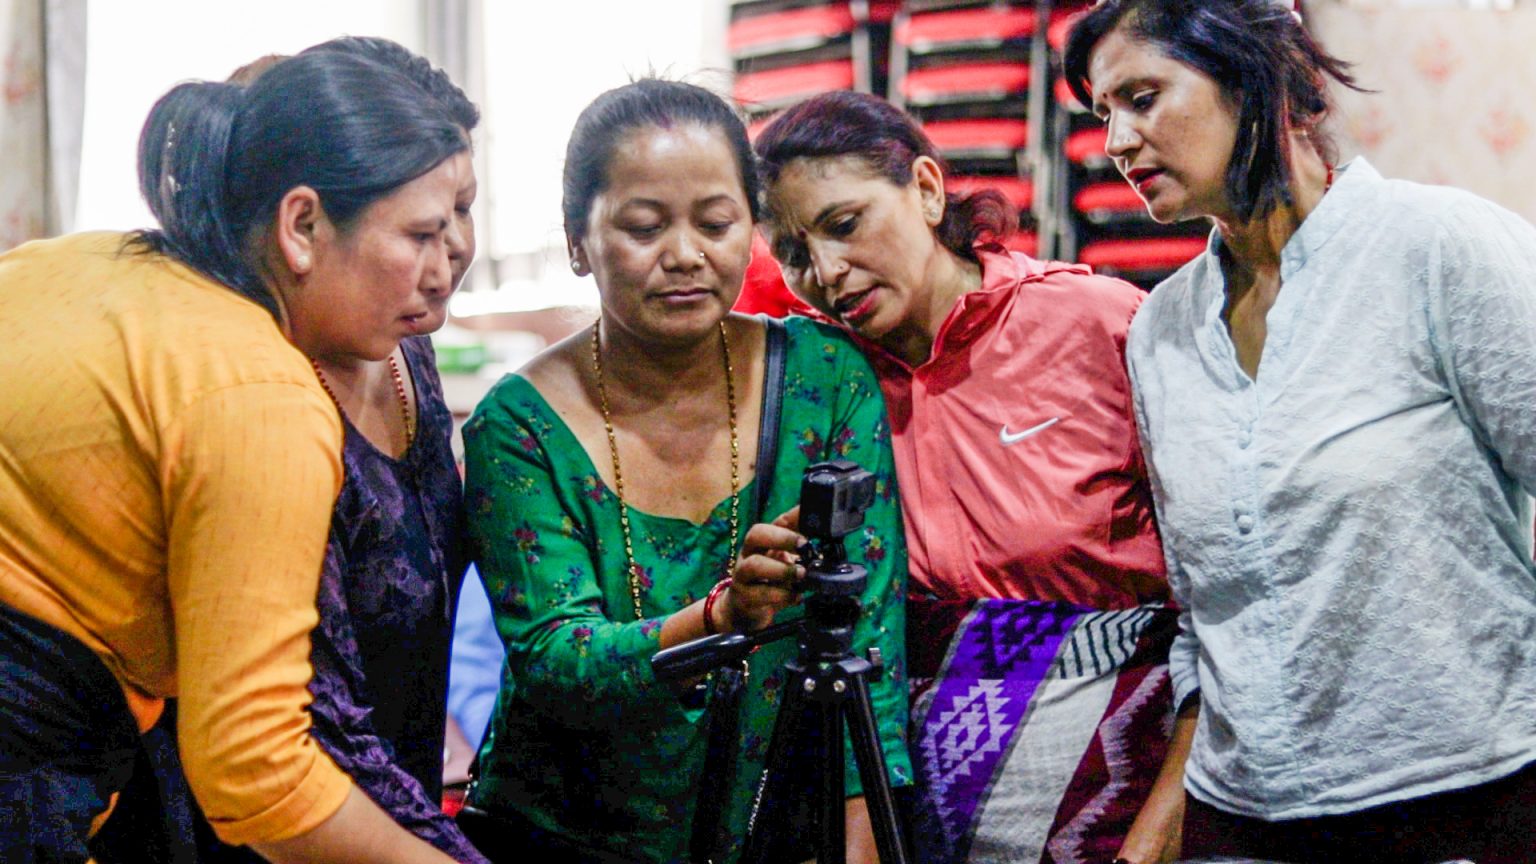 Five Nepali women stand examining a camera on a tripod